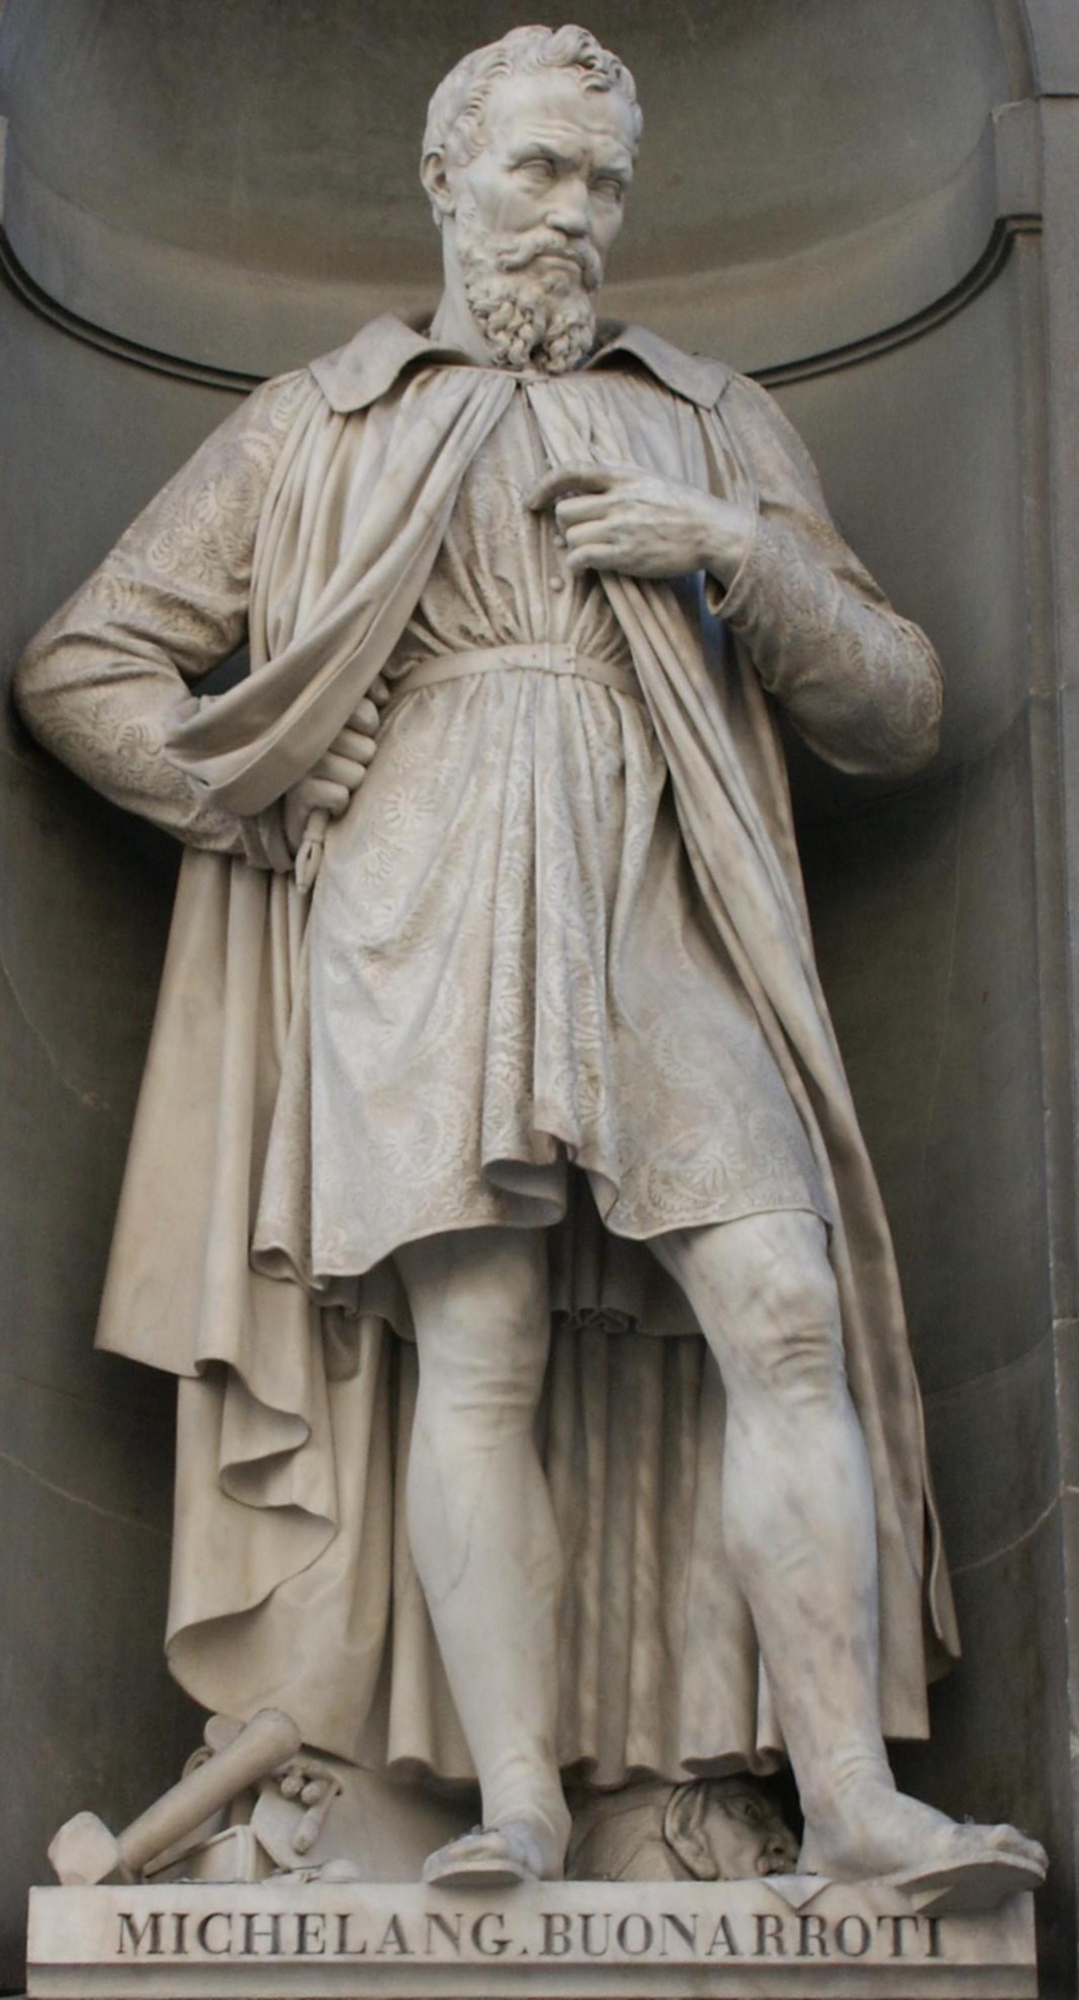 Michelangelo statue in the Uffizi square in Florence